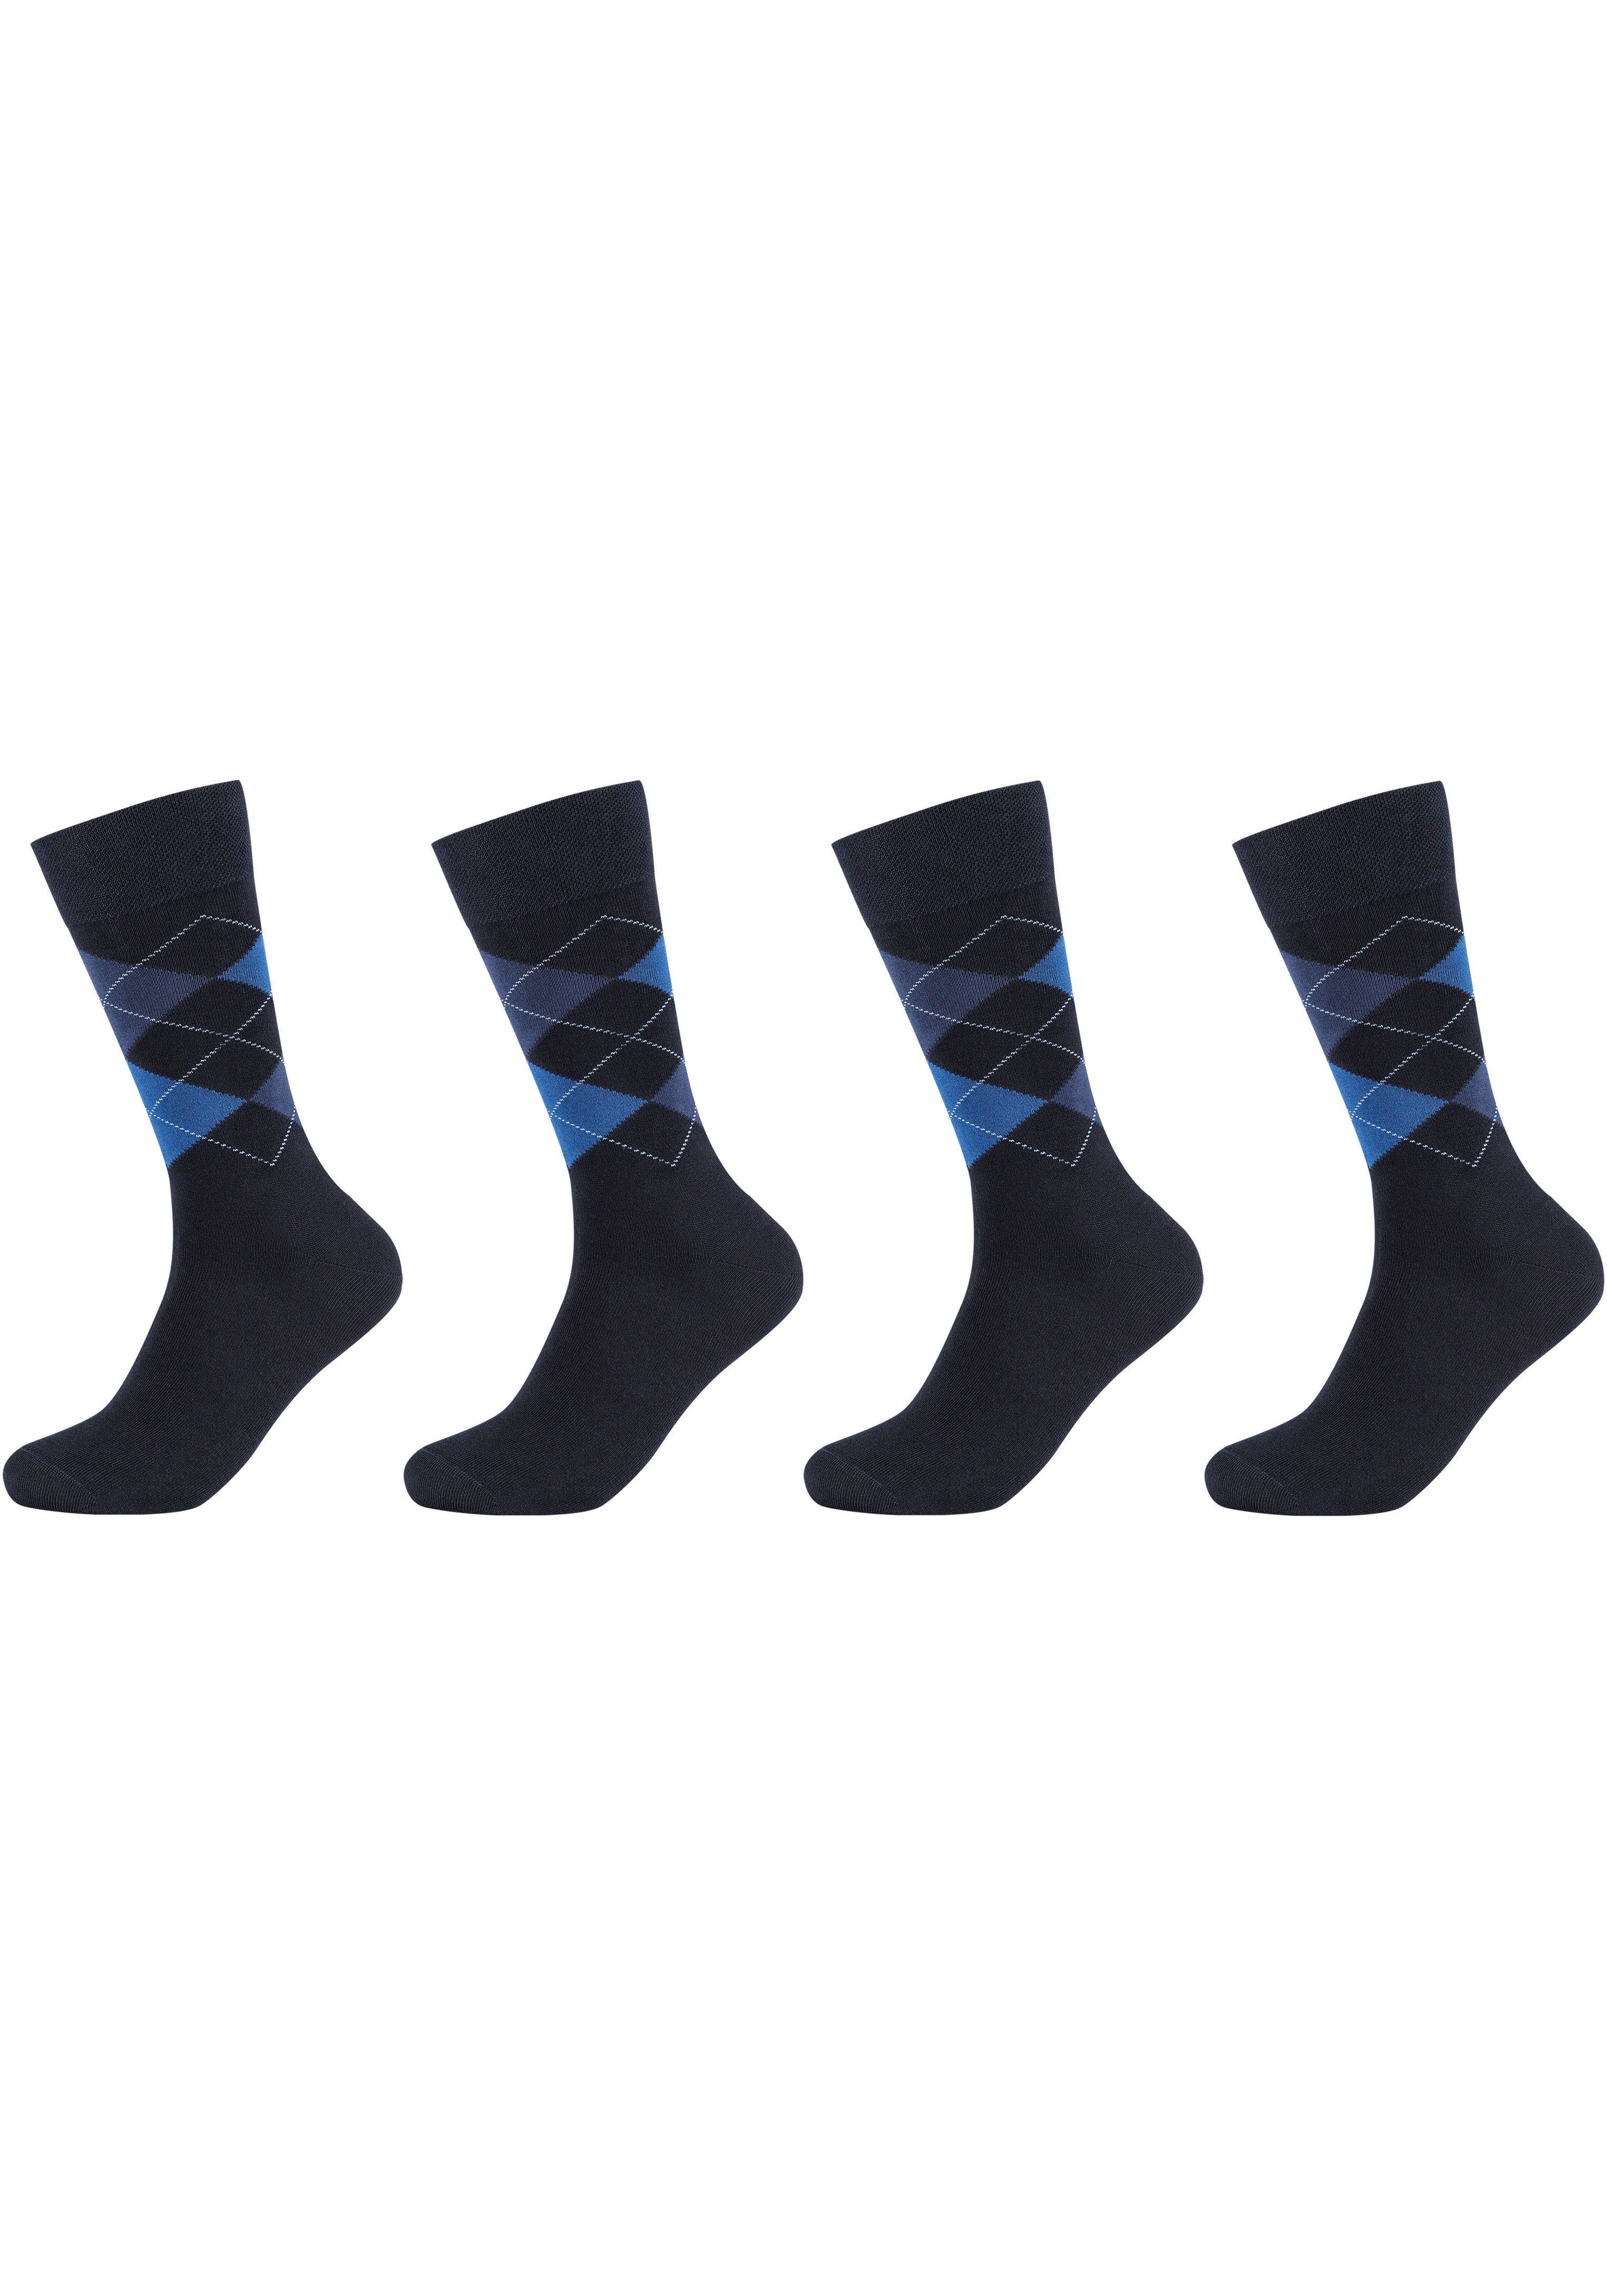 Camano Socken (Packung, 4-Paar) Faltenfreier Tragekomfort dank Elasthan-Anteil navy